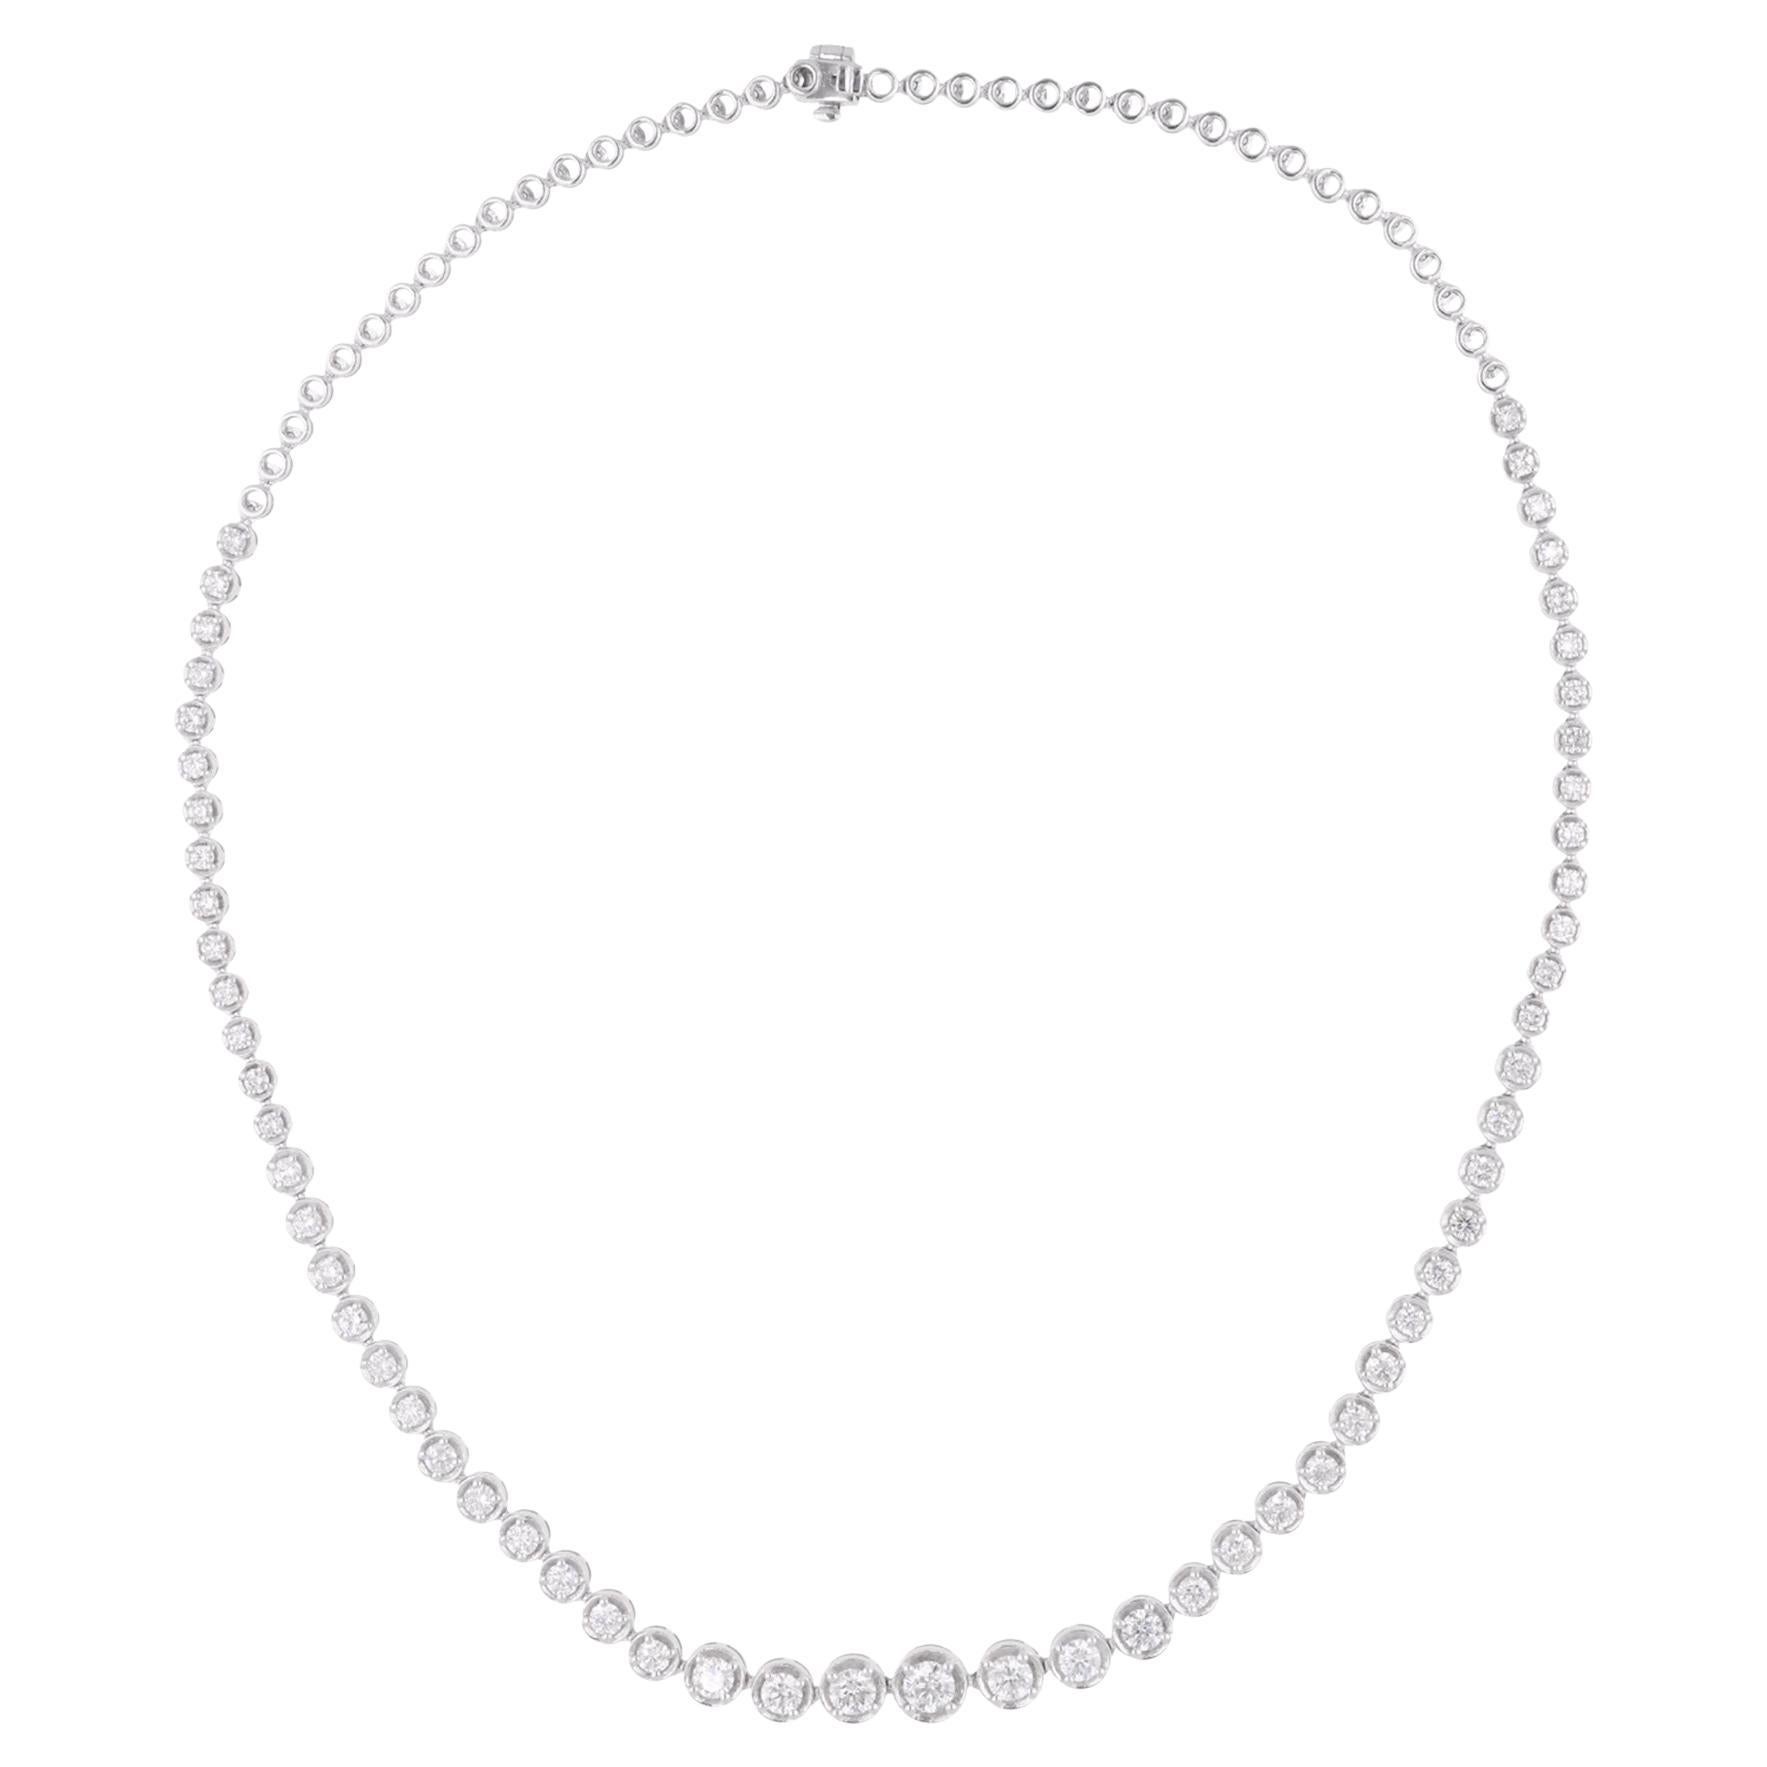 Natural 4.61 Carat Round Diamond Necklace 18 Karat White Gold Handmade Jewelry For Sale